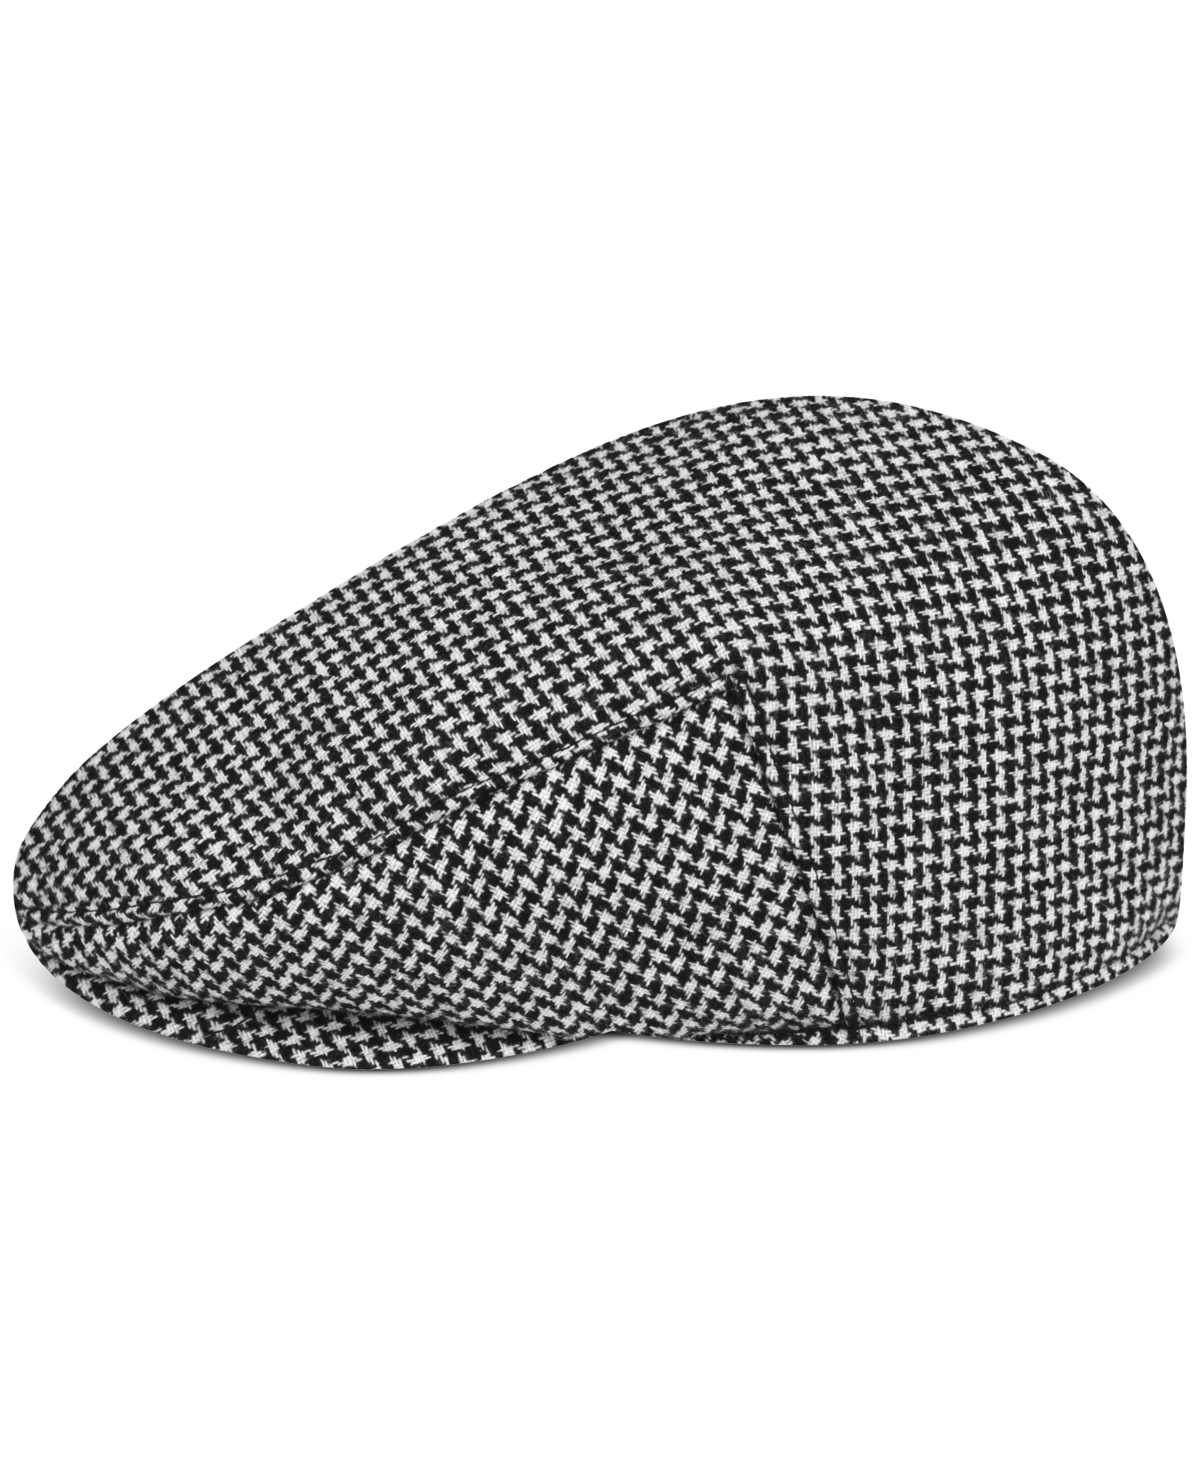 Wool Blend Country Gentleman Hat, British Ivy Cap - Black/White